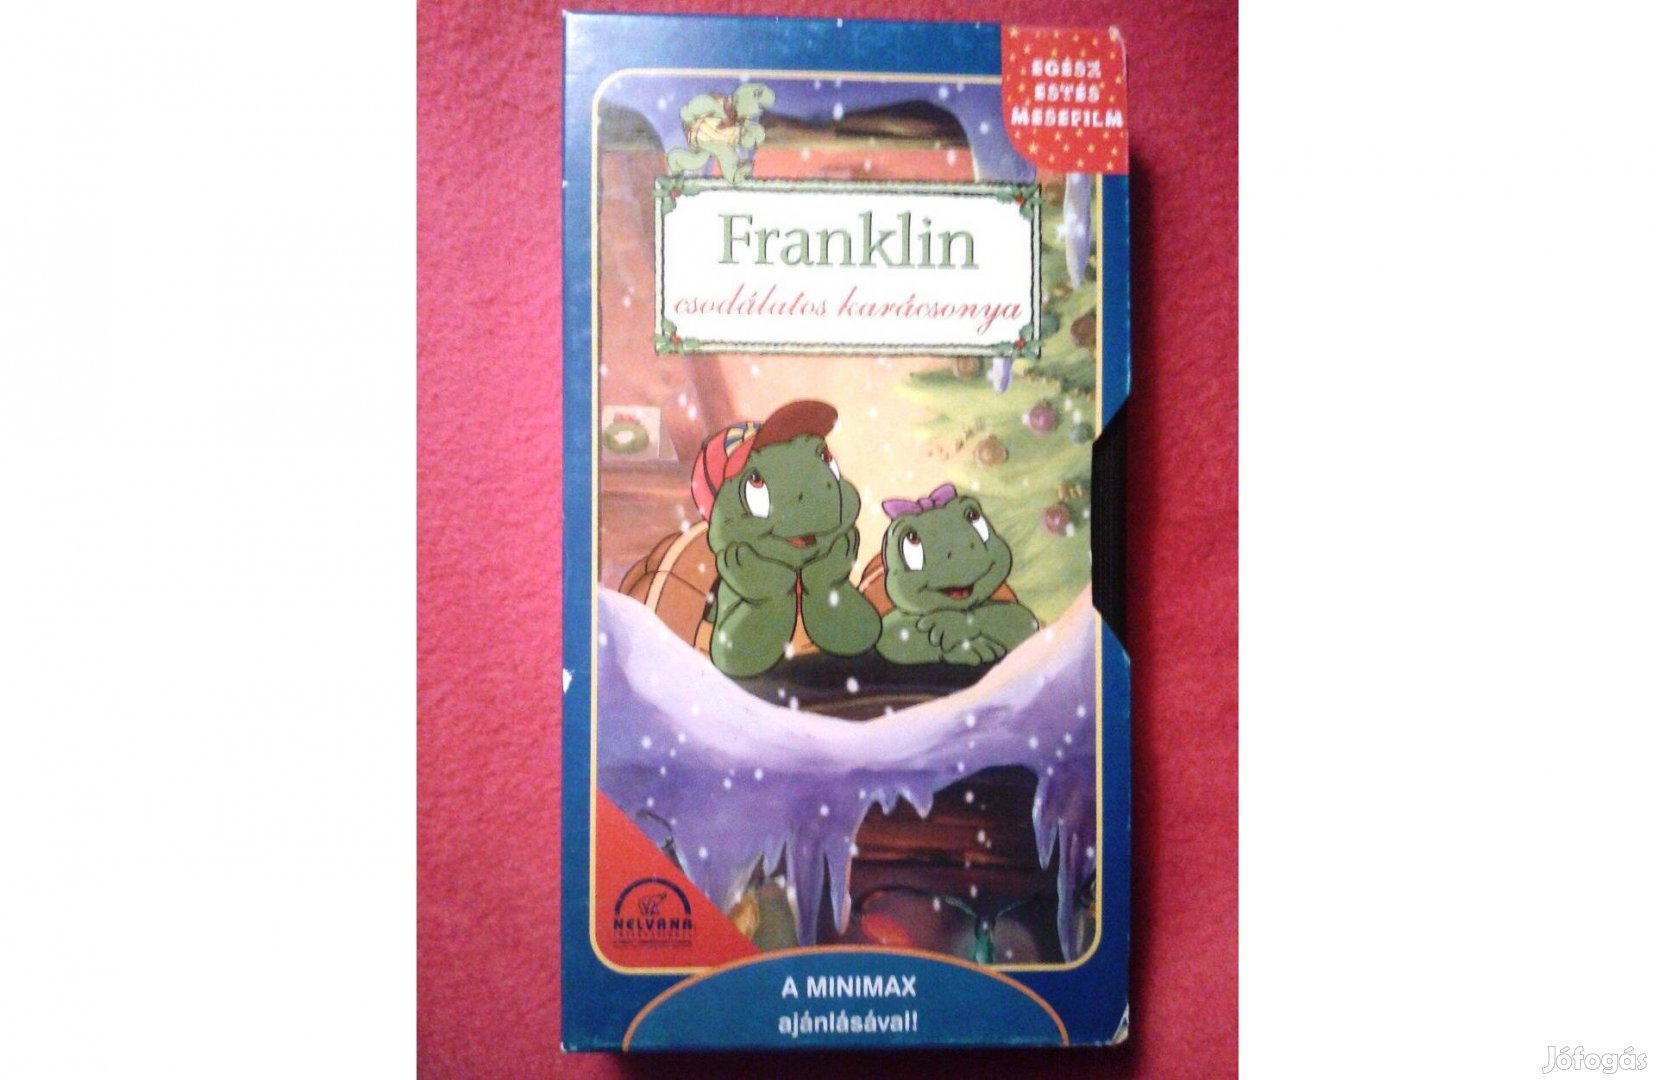 Franklin csodálatos karácsonya VHS kazetta mesefilm